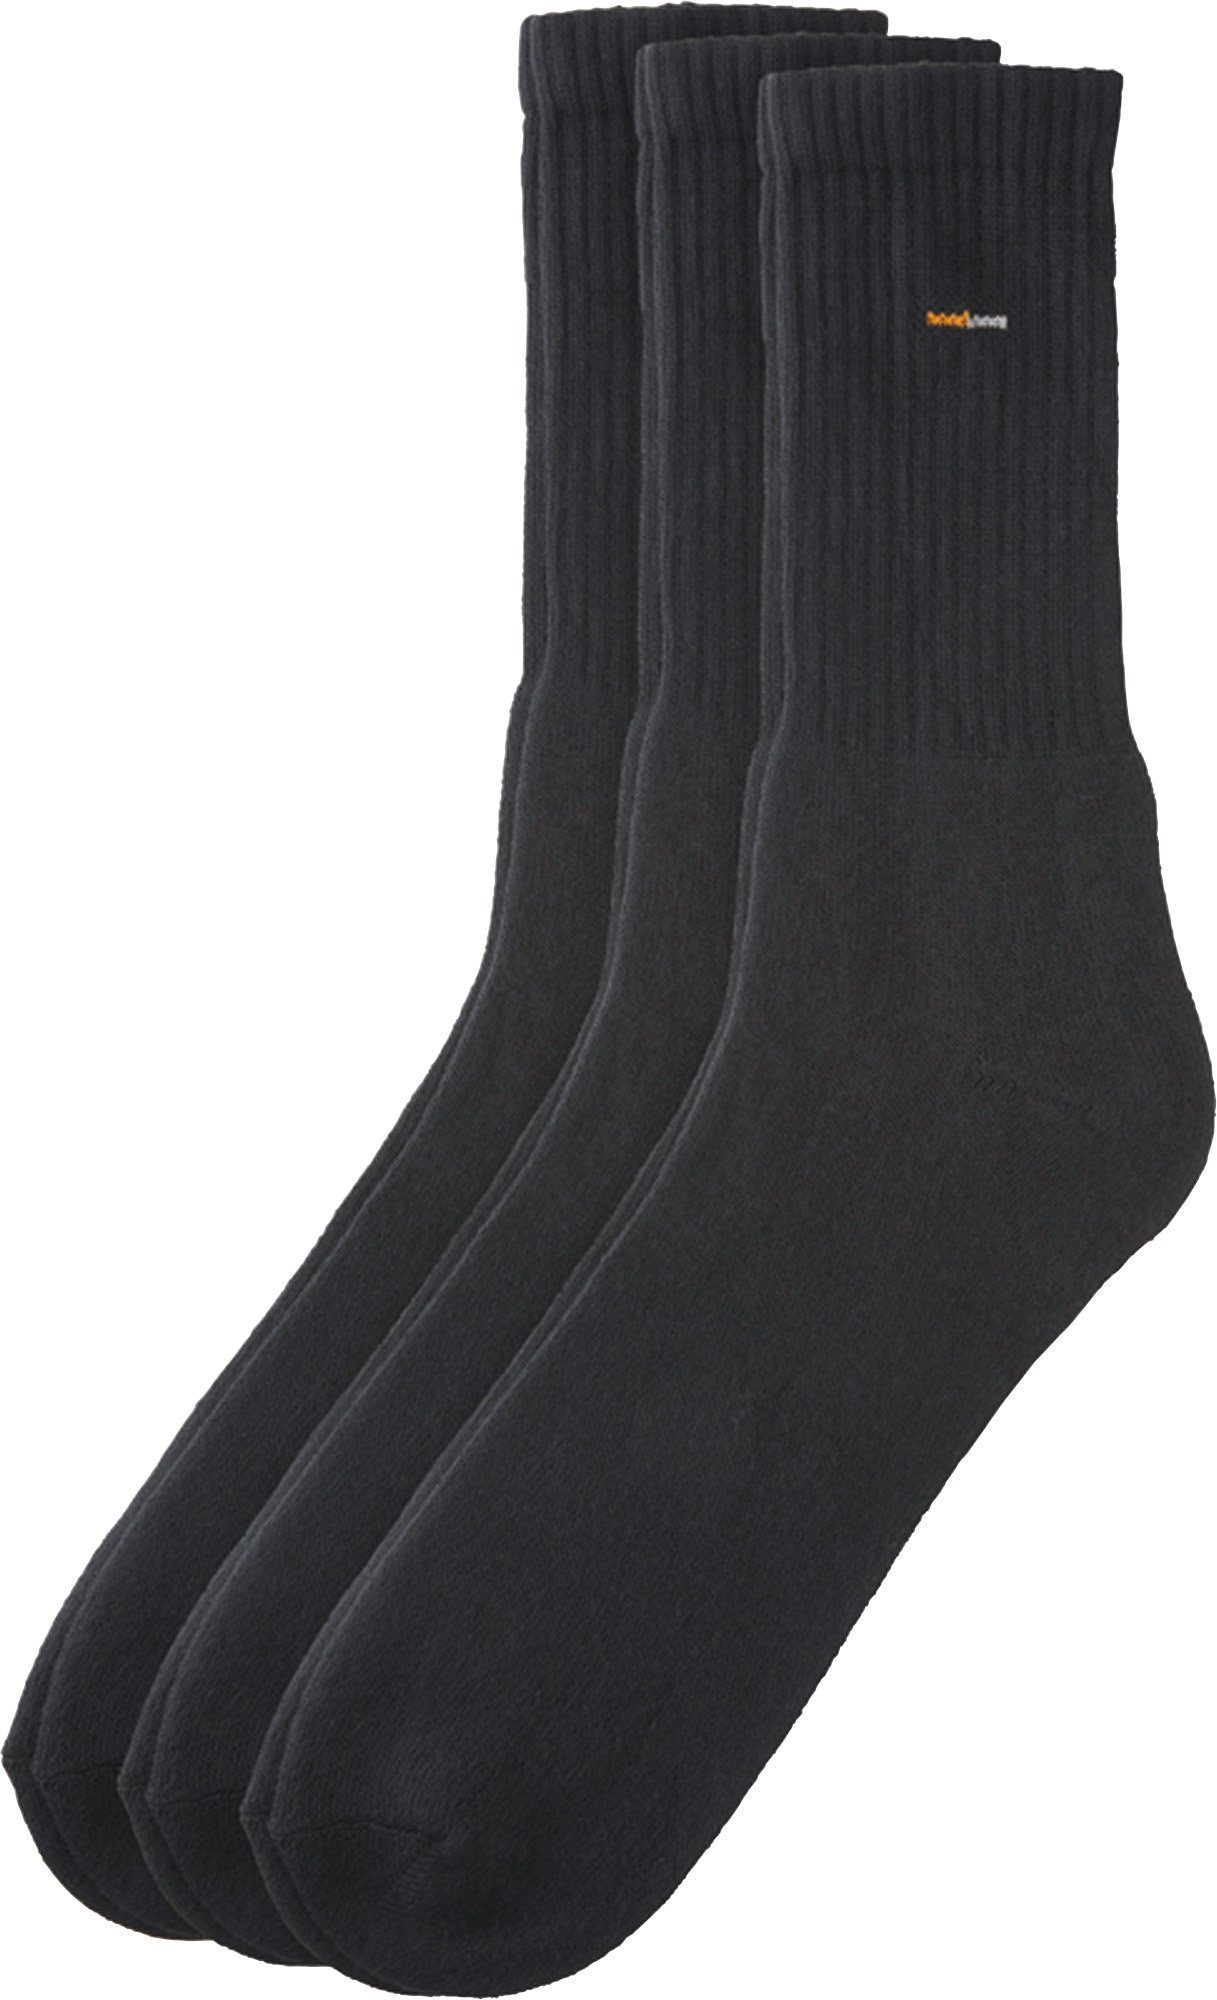 Sportliche Camano Socken kaufen » Camano Sportsocken | OTTO